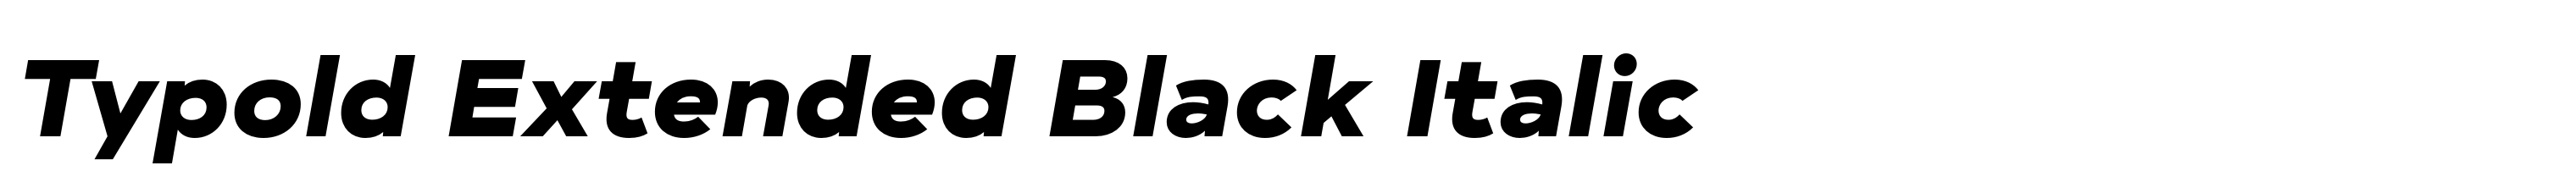 Typold Extended Black Italic